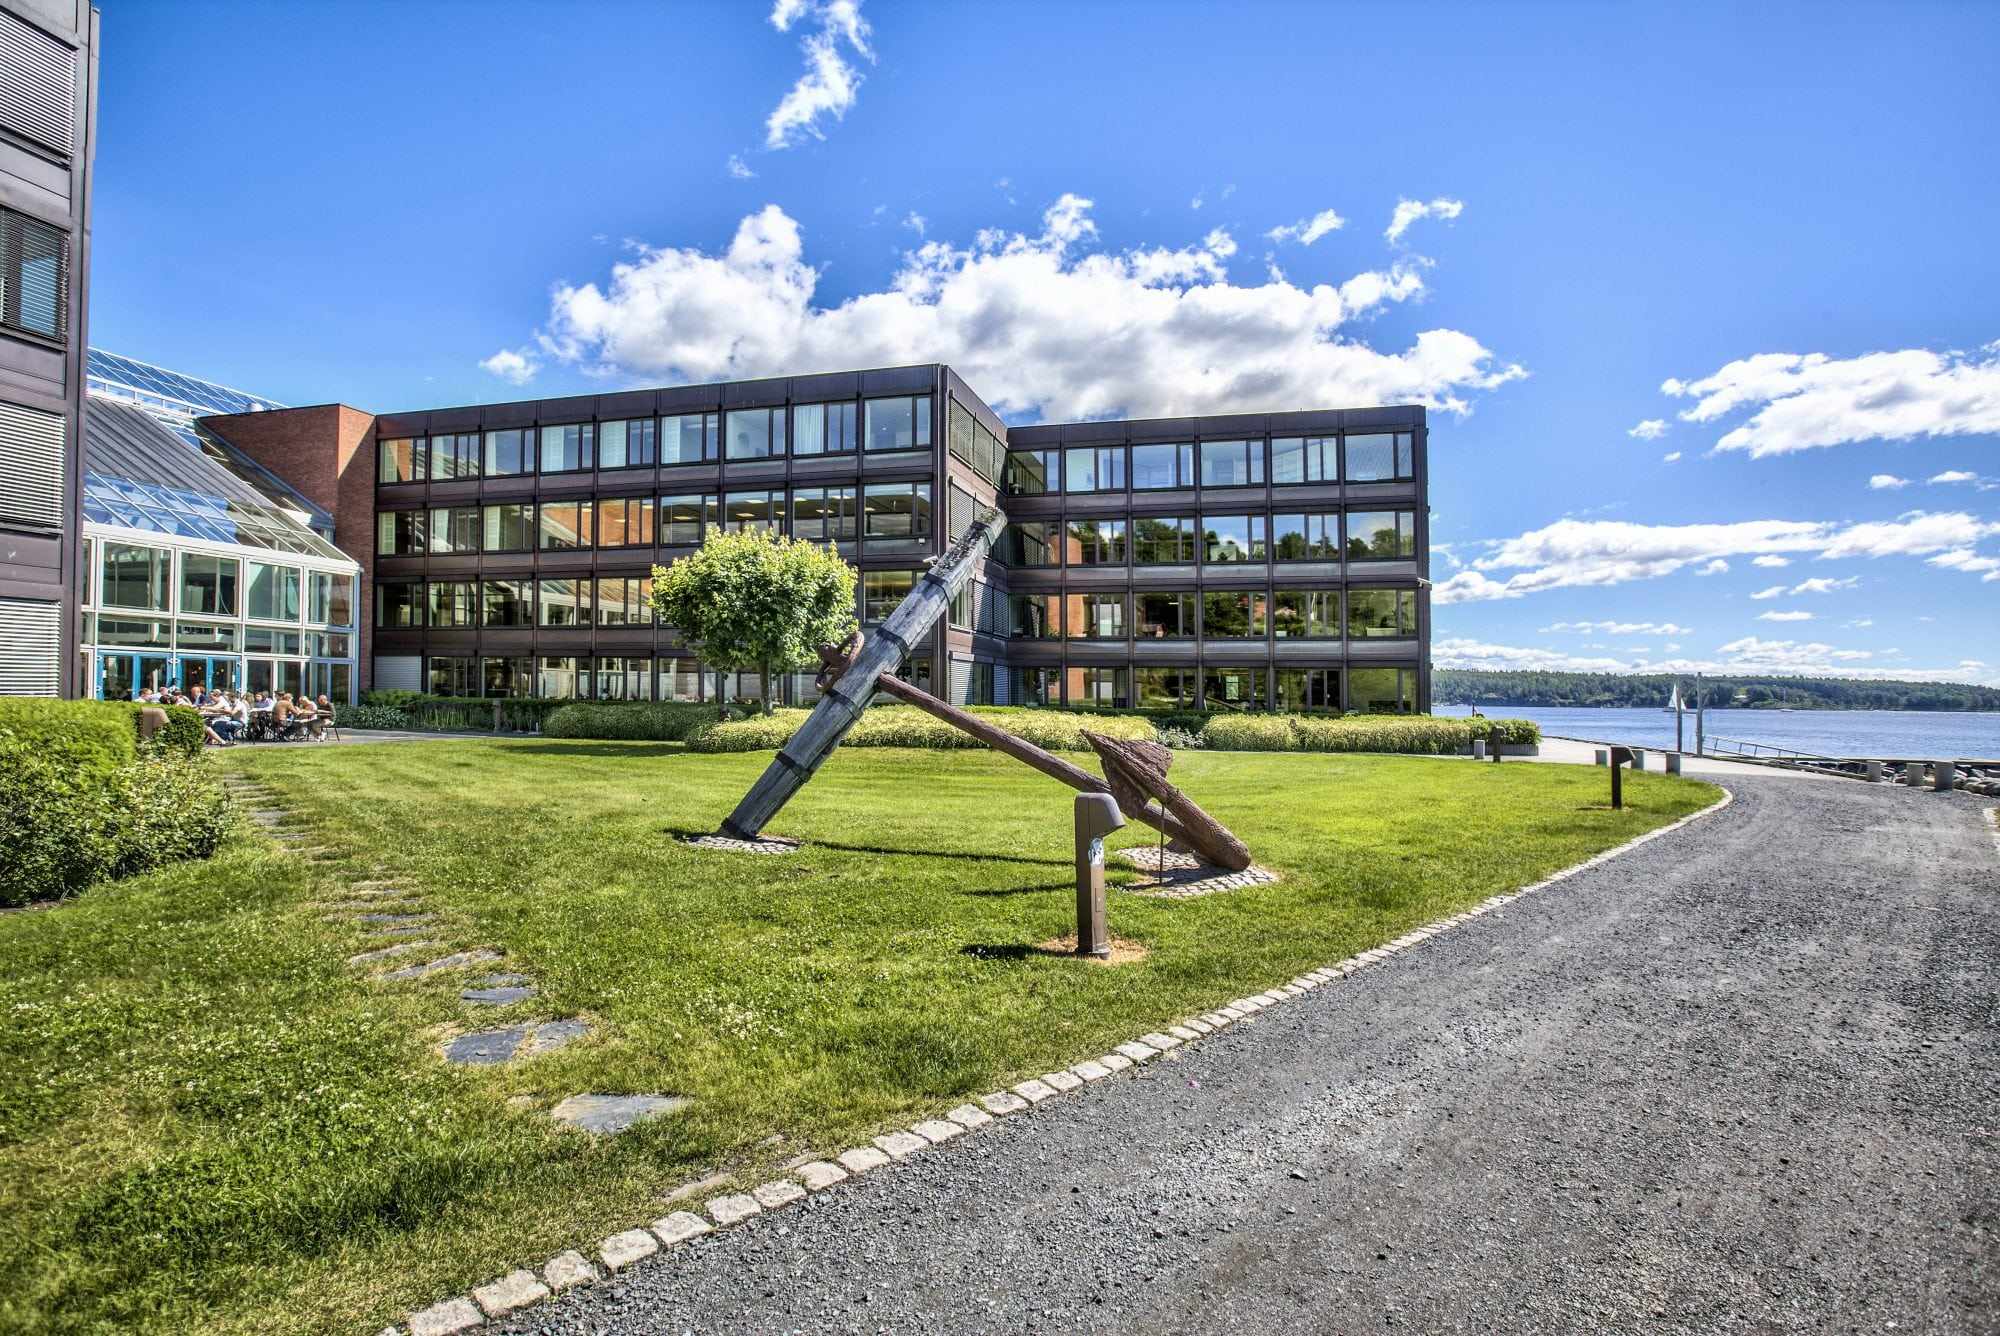 Memcare's hovedkontor i Norge